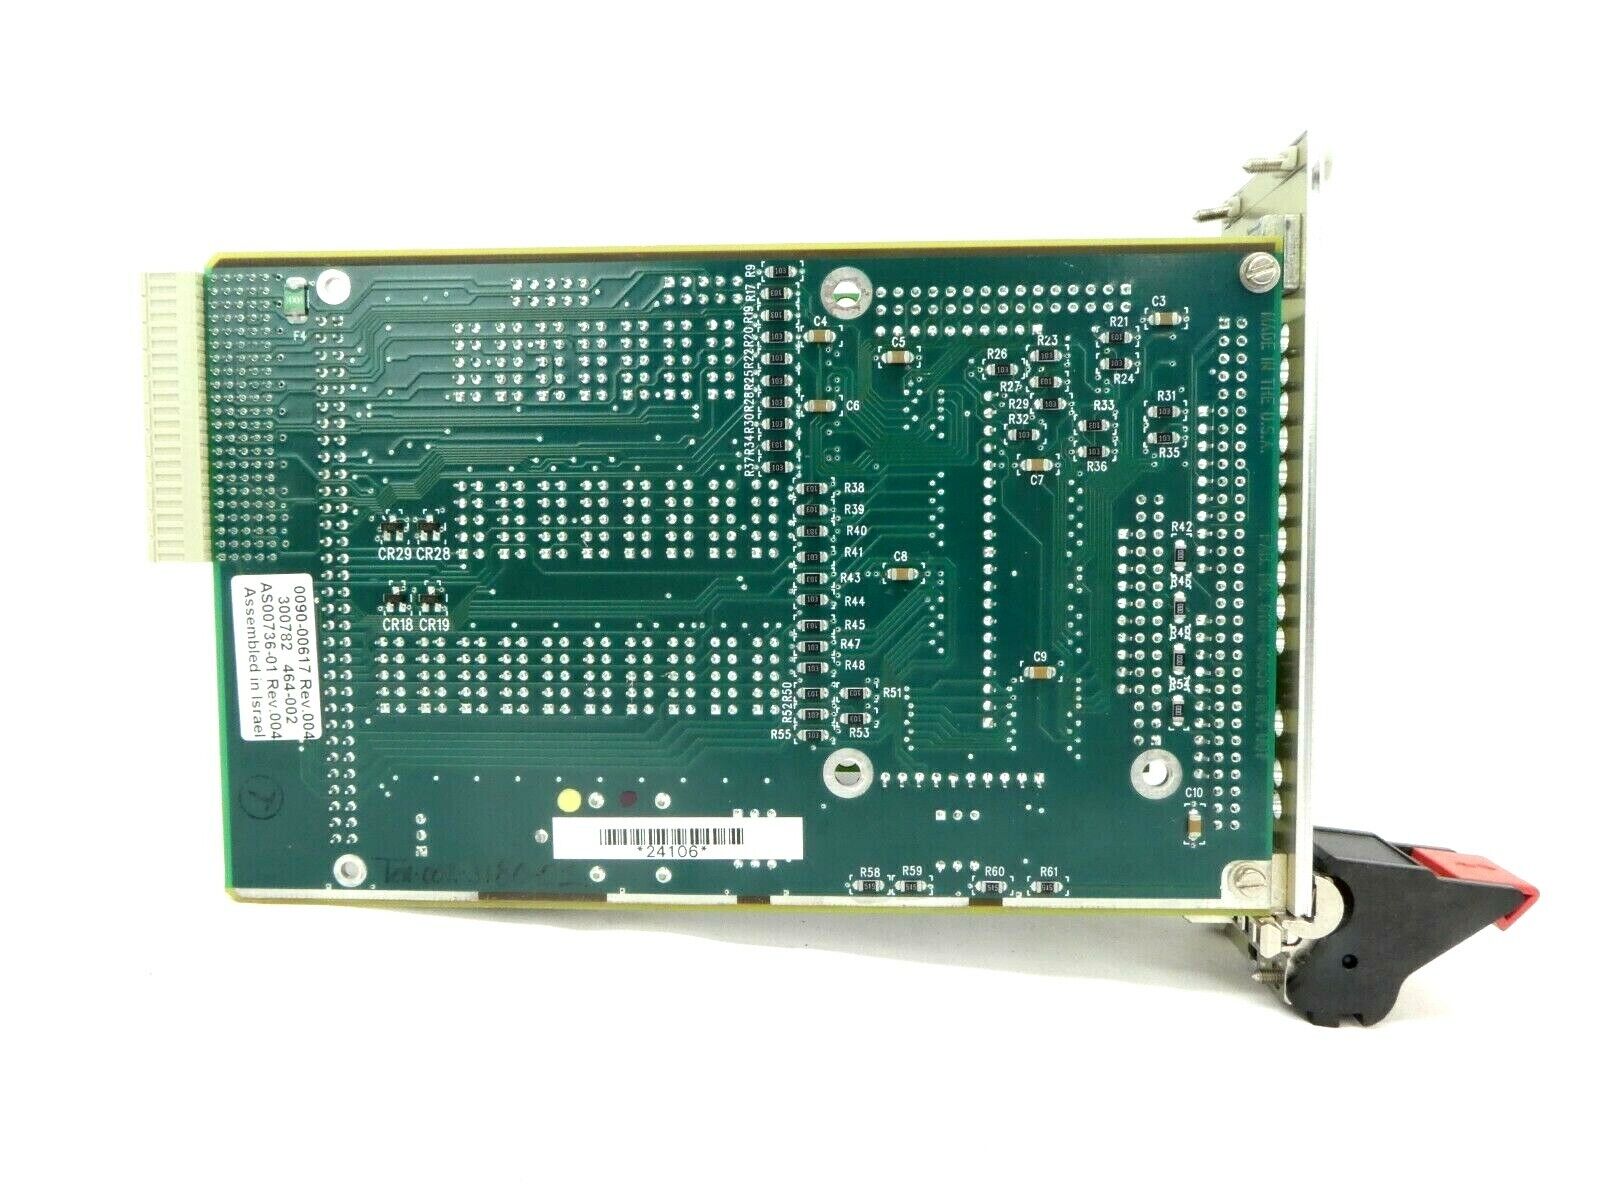 AMAT Applied Materials 0090-00617 300mm Loadlock Interlock PCB Card Centura